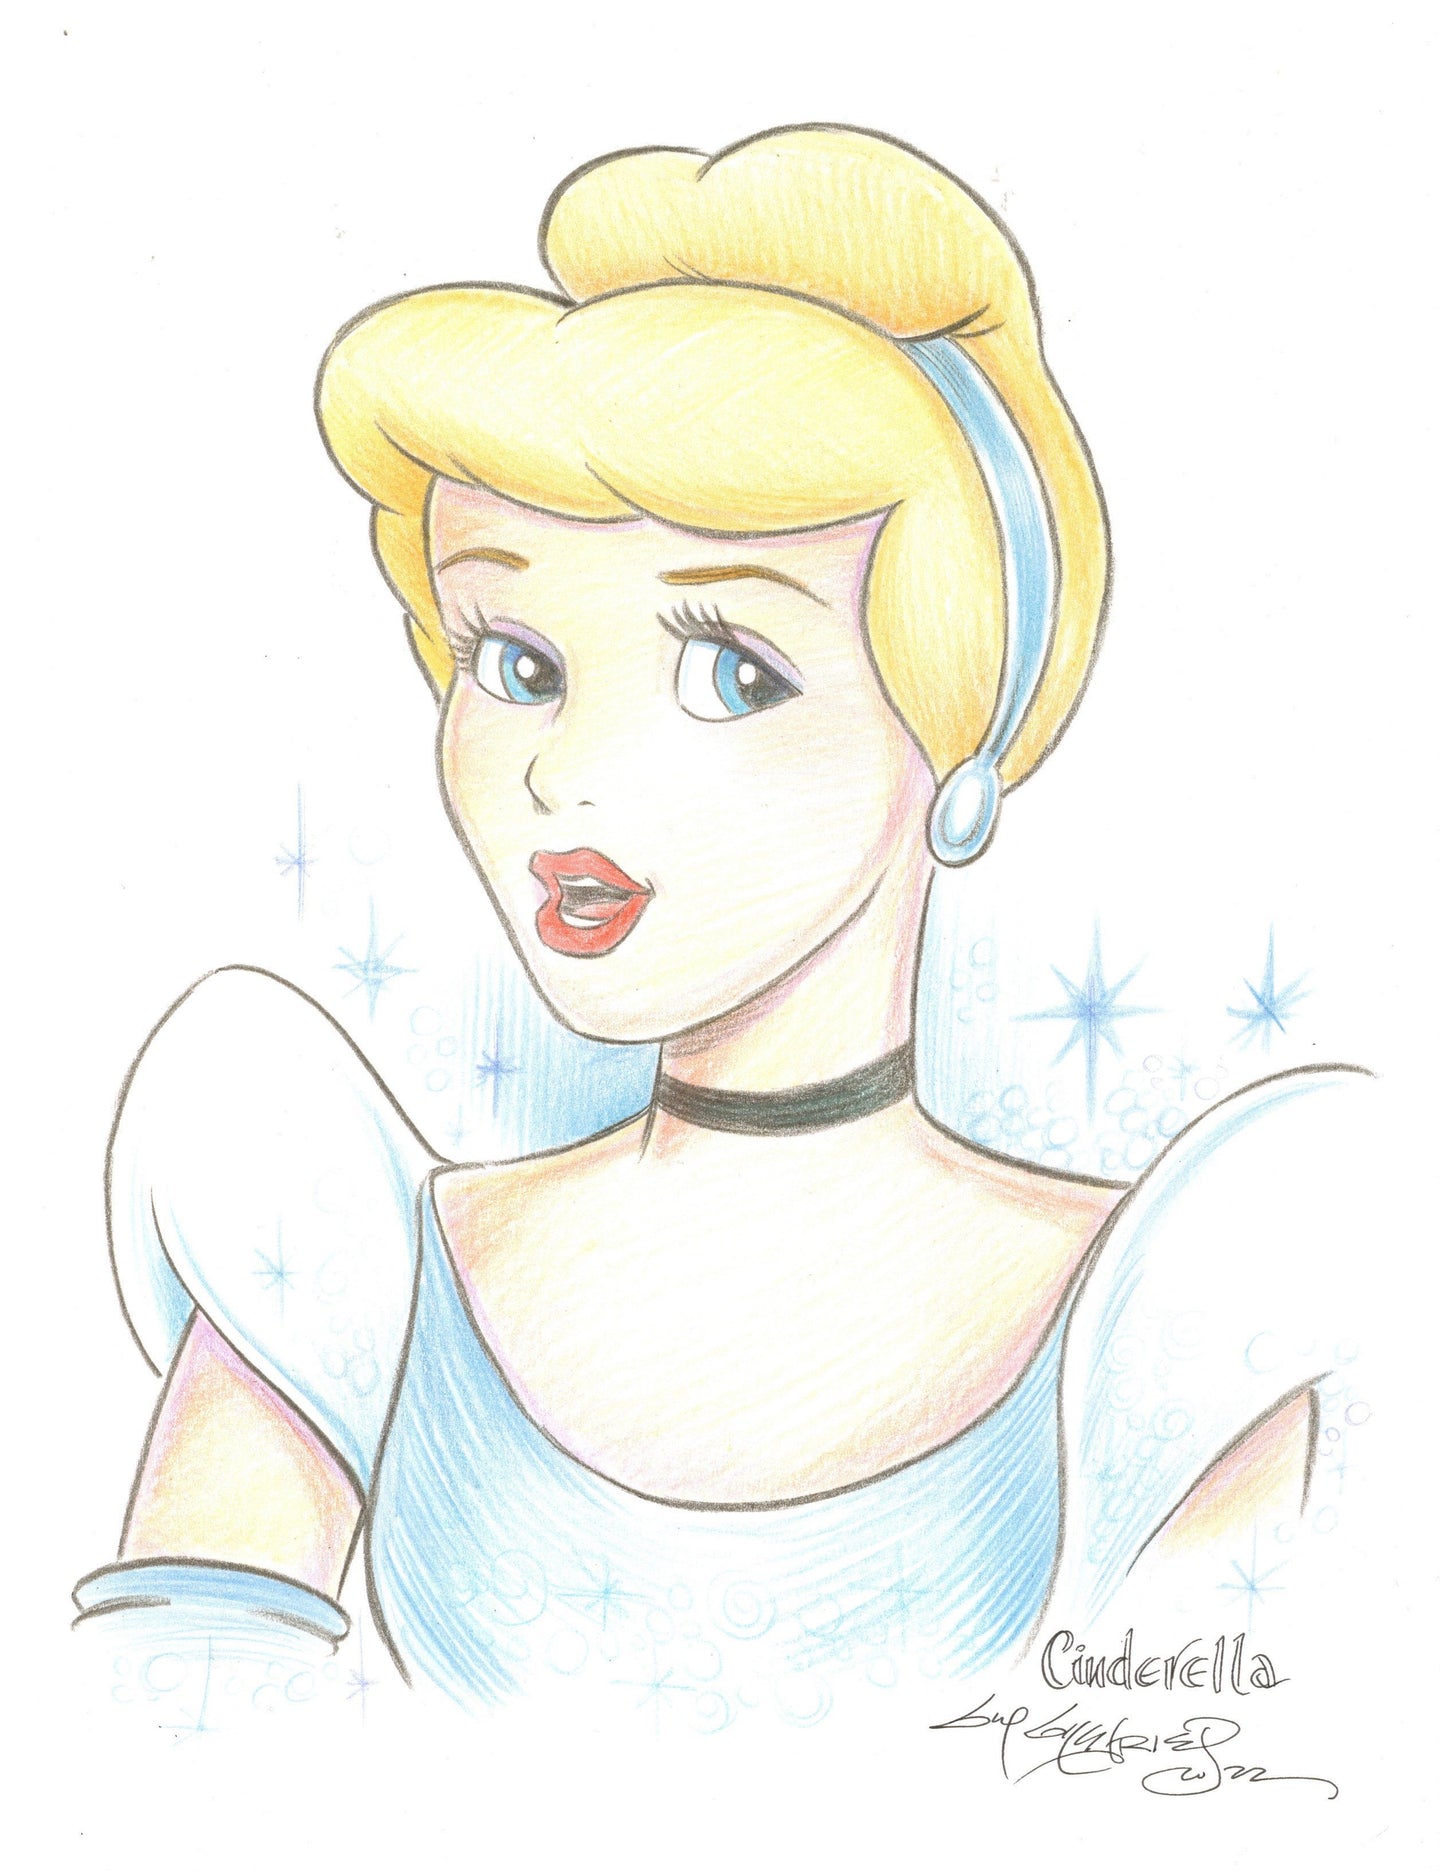 Disney's Cinderella Original Art 8.5x11 Sketch - Created by Guy Gilchrist